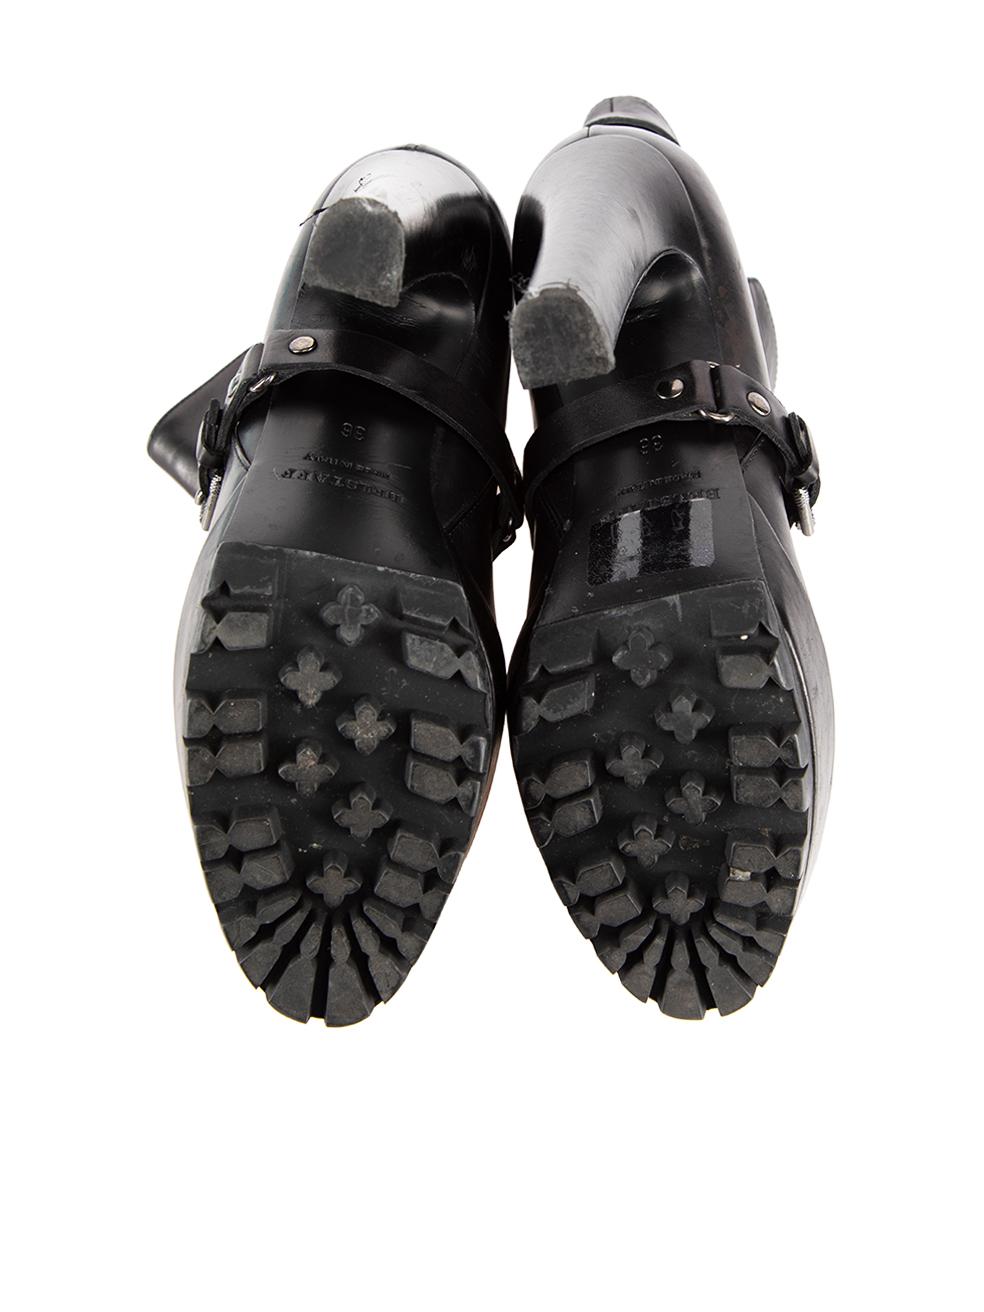 Women's Belstaff Black Leather Buckle Strap Boots Size IT 36 For Sale